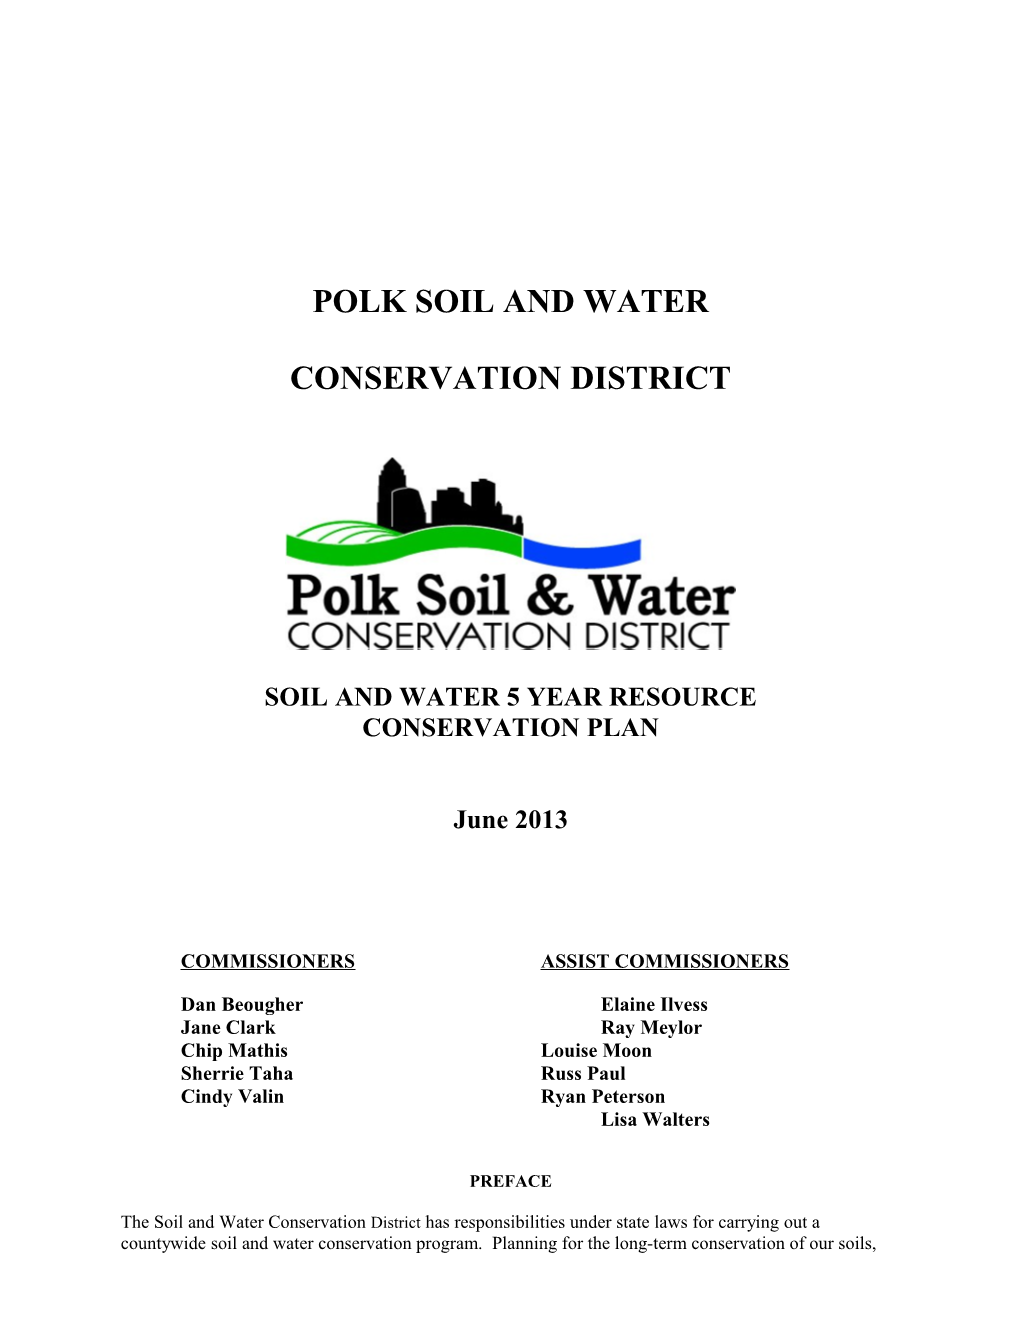 Polk Soil and Water